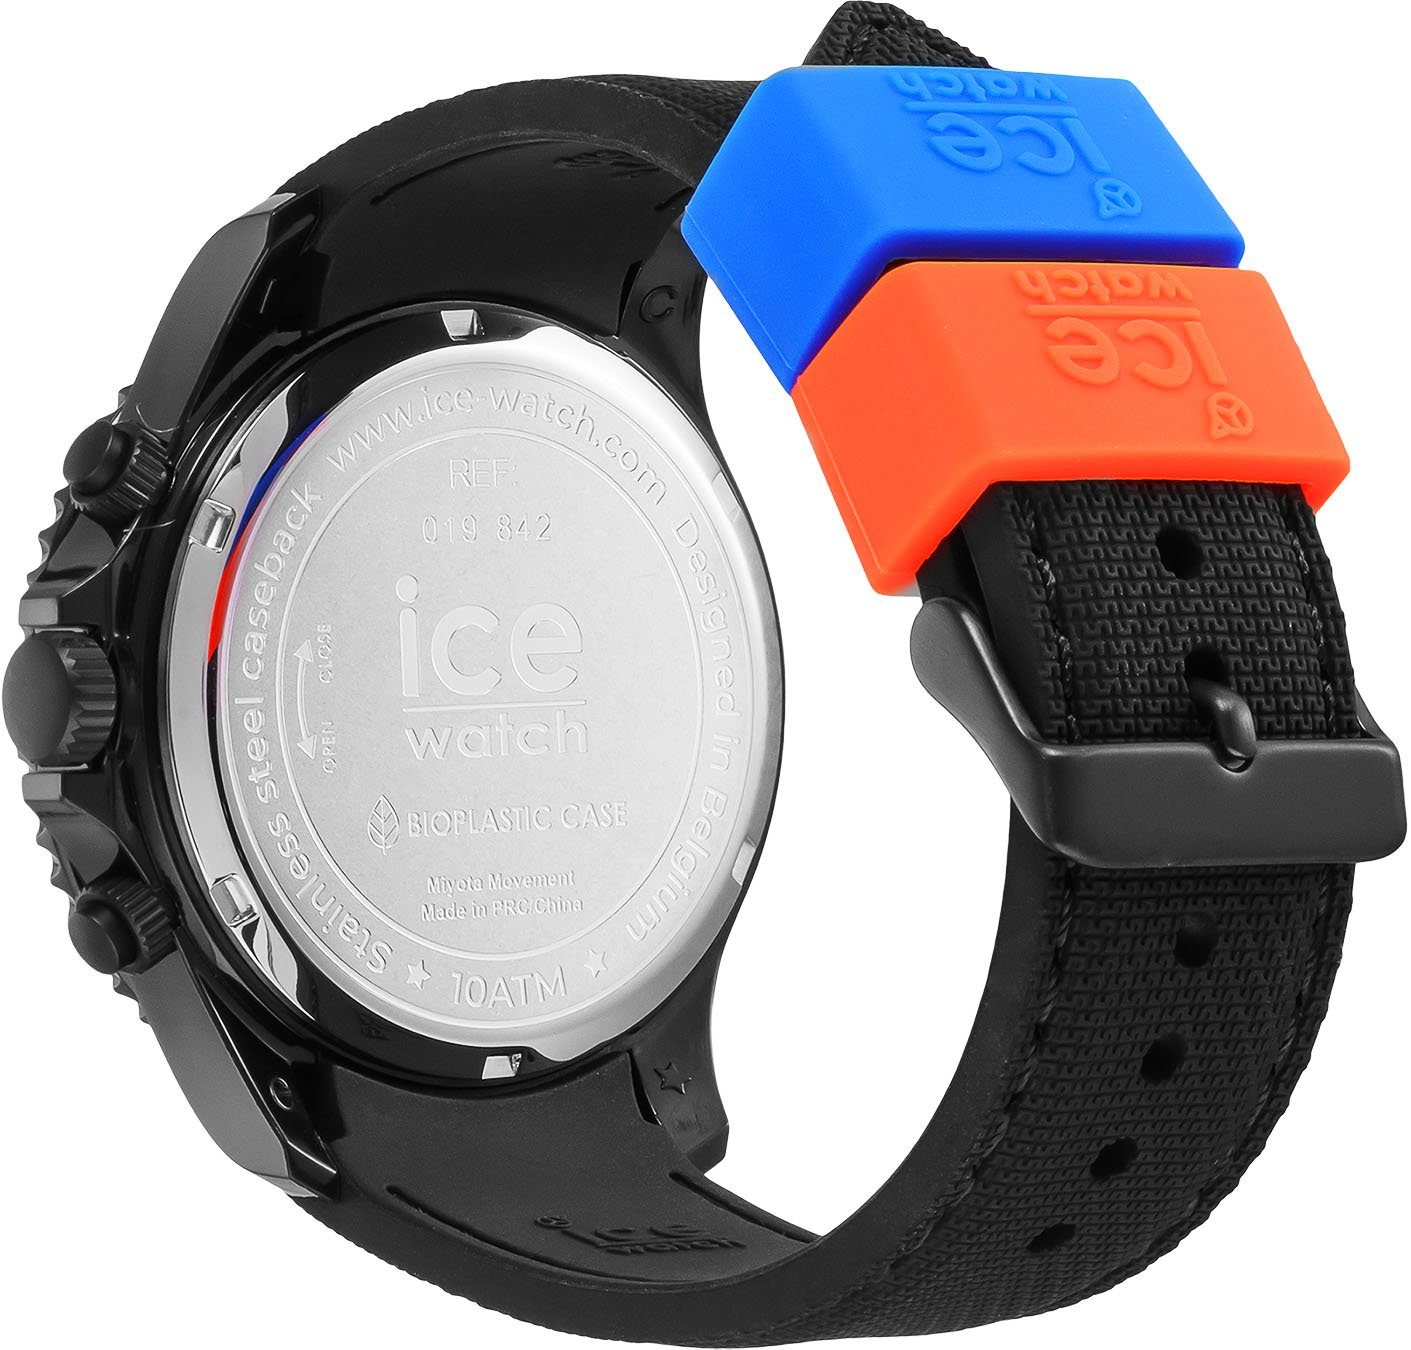 Large - ice-watch CH, 019842 - ICE chrono Chronograph - schwarz Trilogy